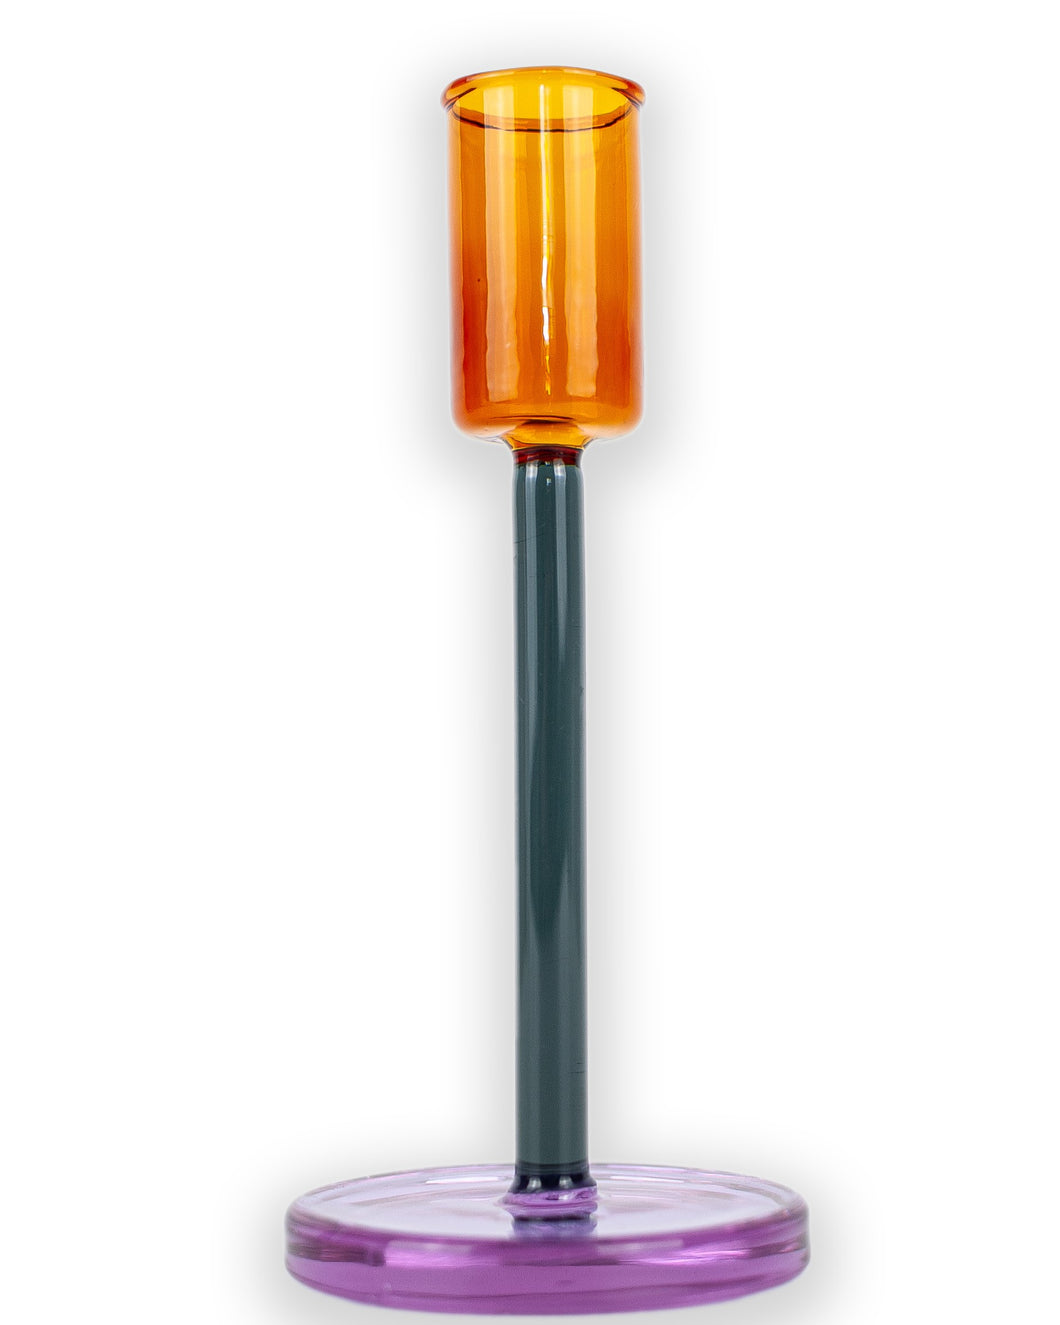 Block Design - Orange, Grey and Lilac Candlestick